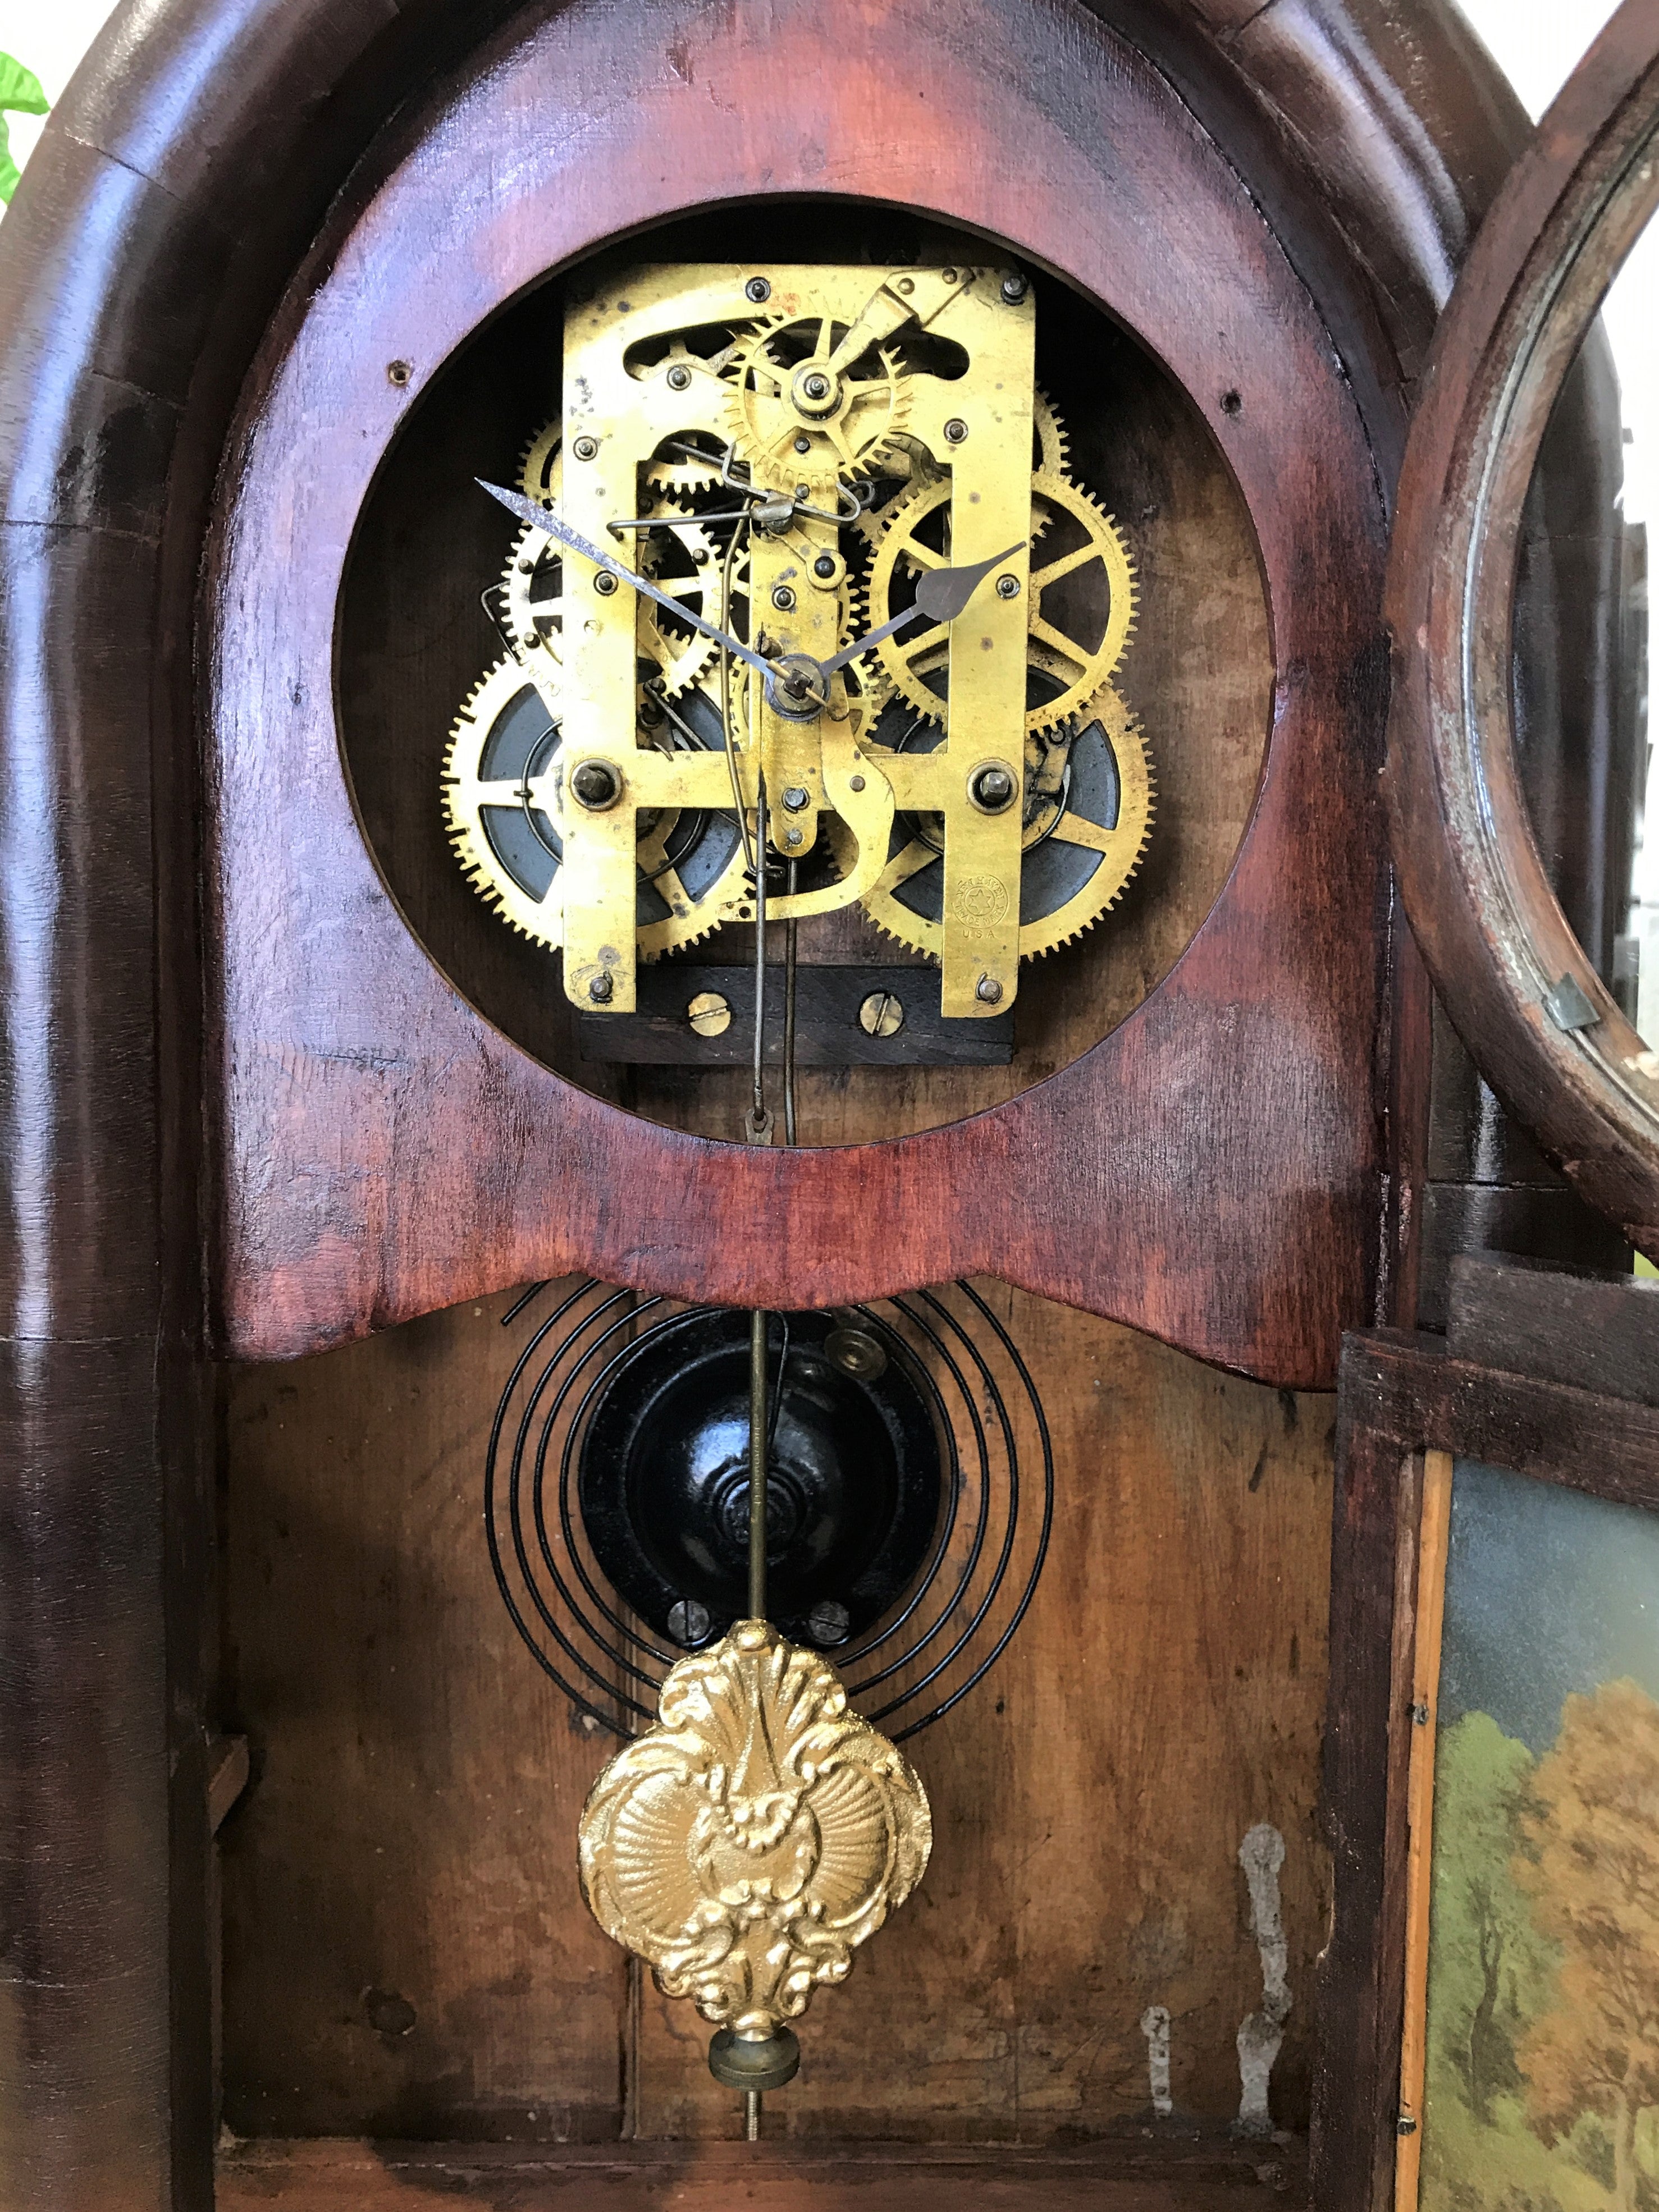 Antique Cathedral Mantel Clock | eXibit collection